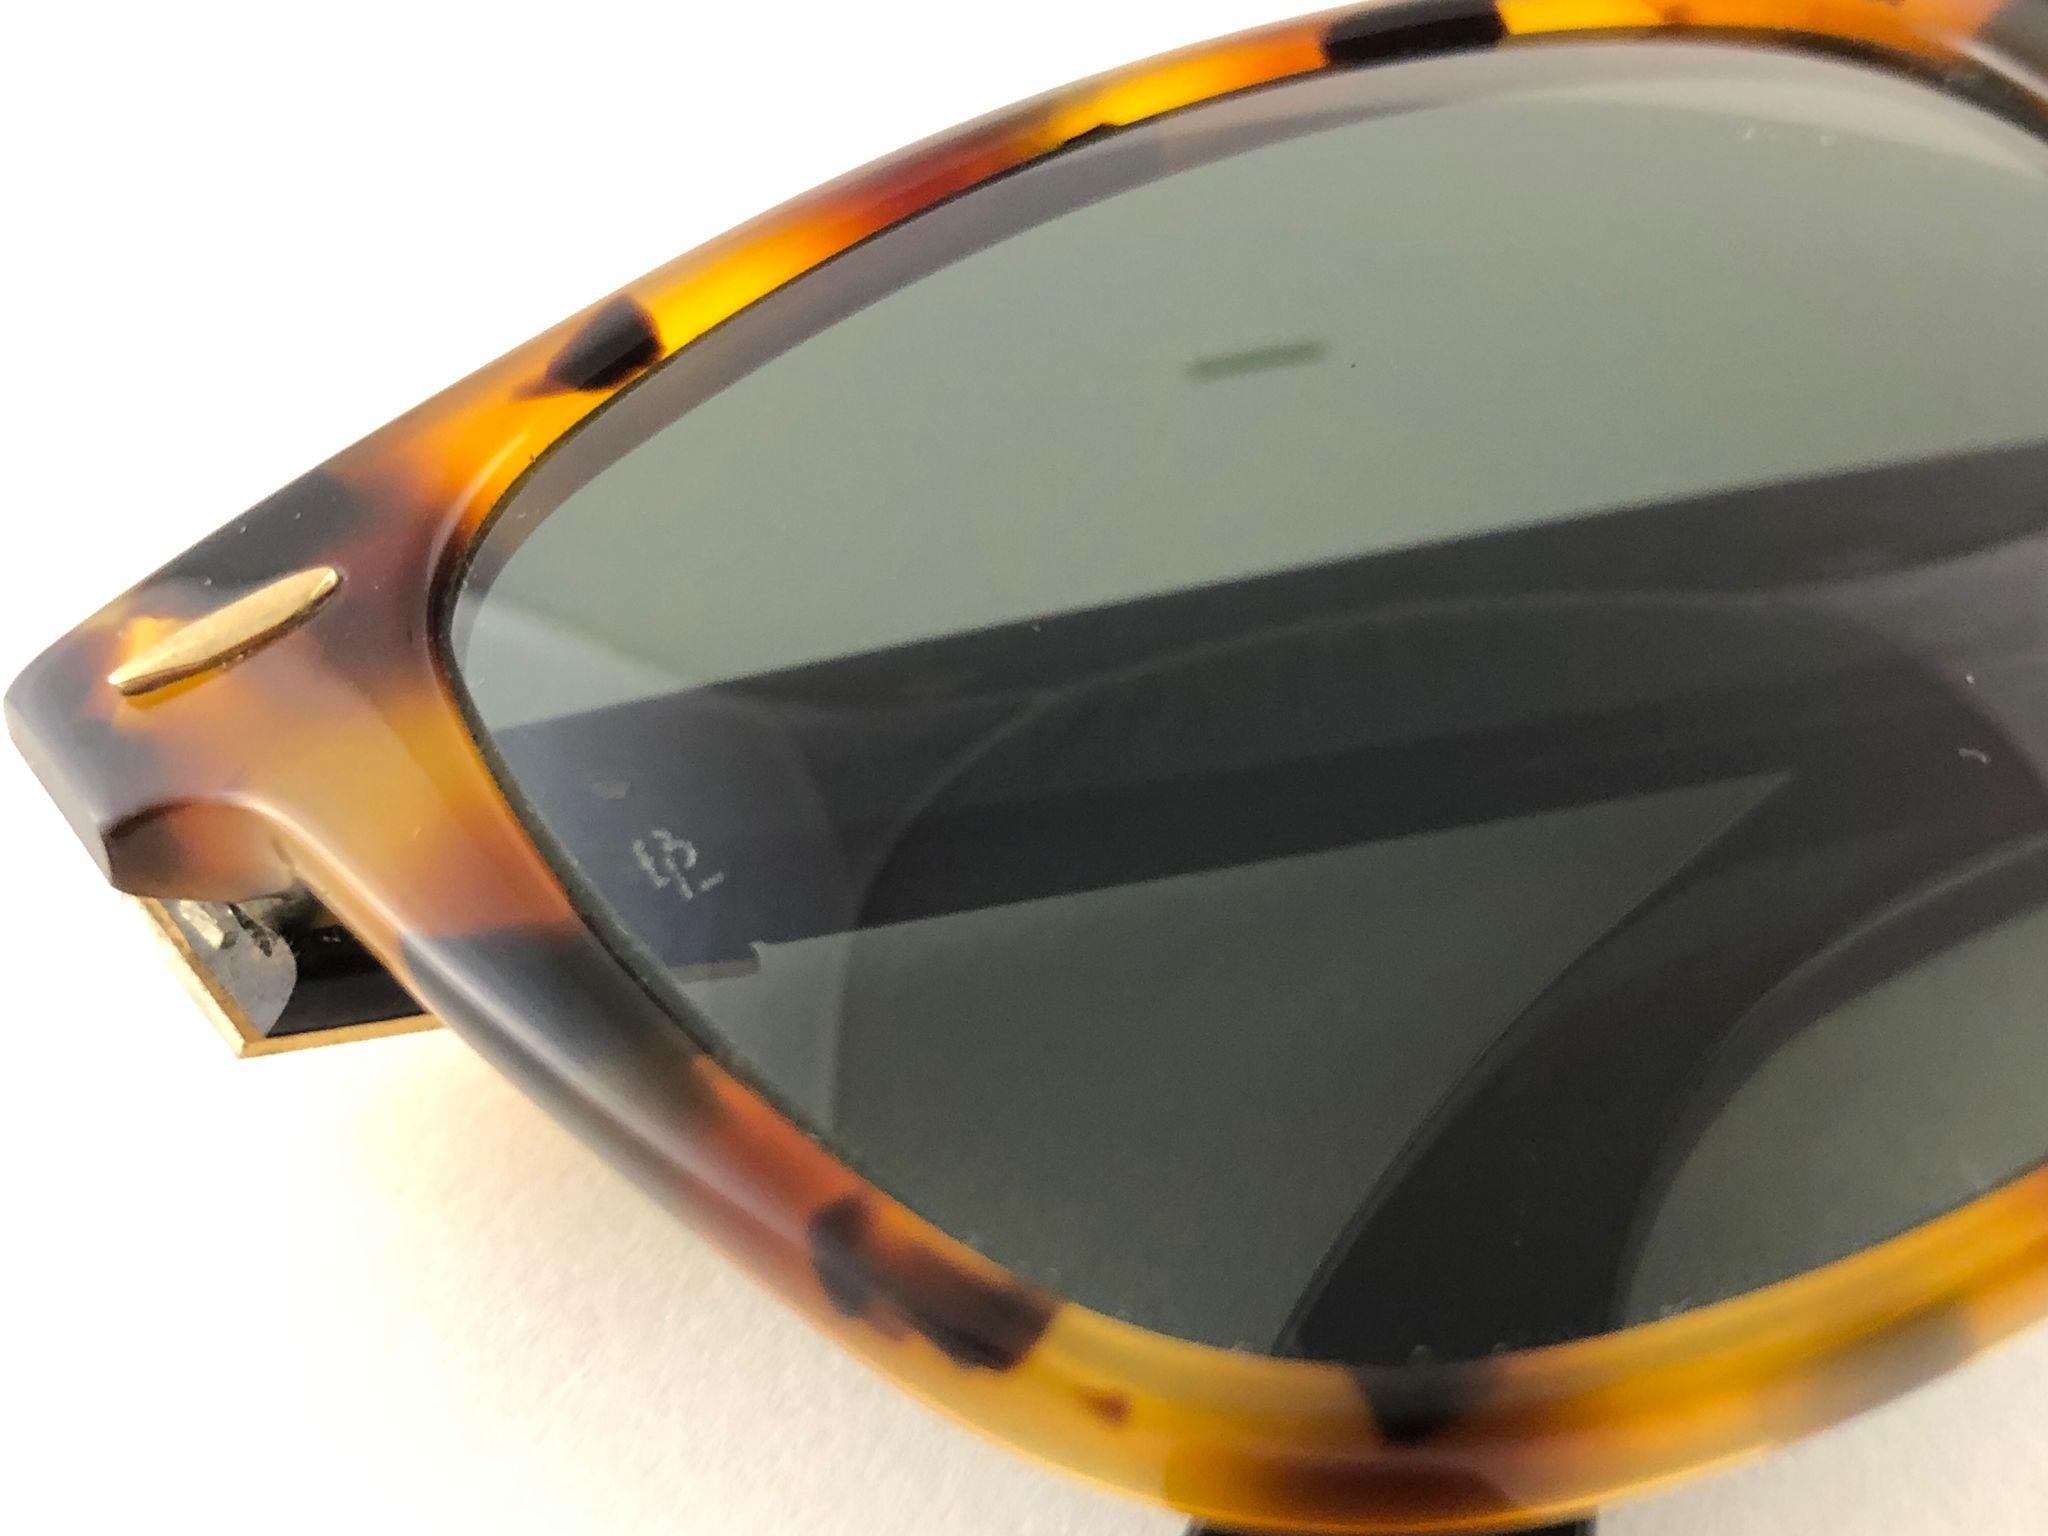 New Ray Ban The Wayfarer II Tortoise G15 Grey Lenses USA 80's Sunglasses 2